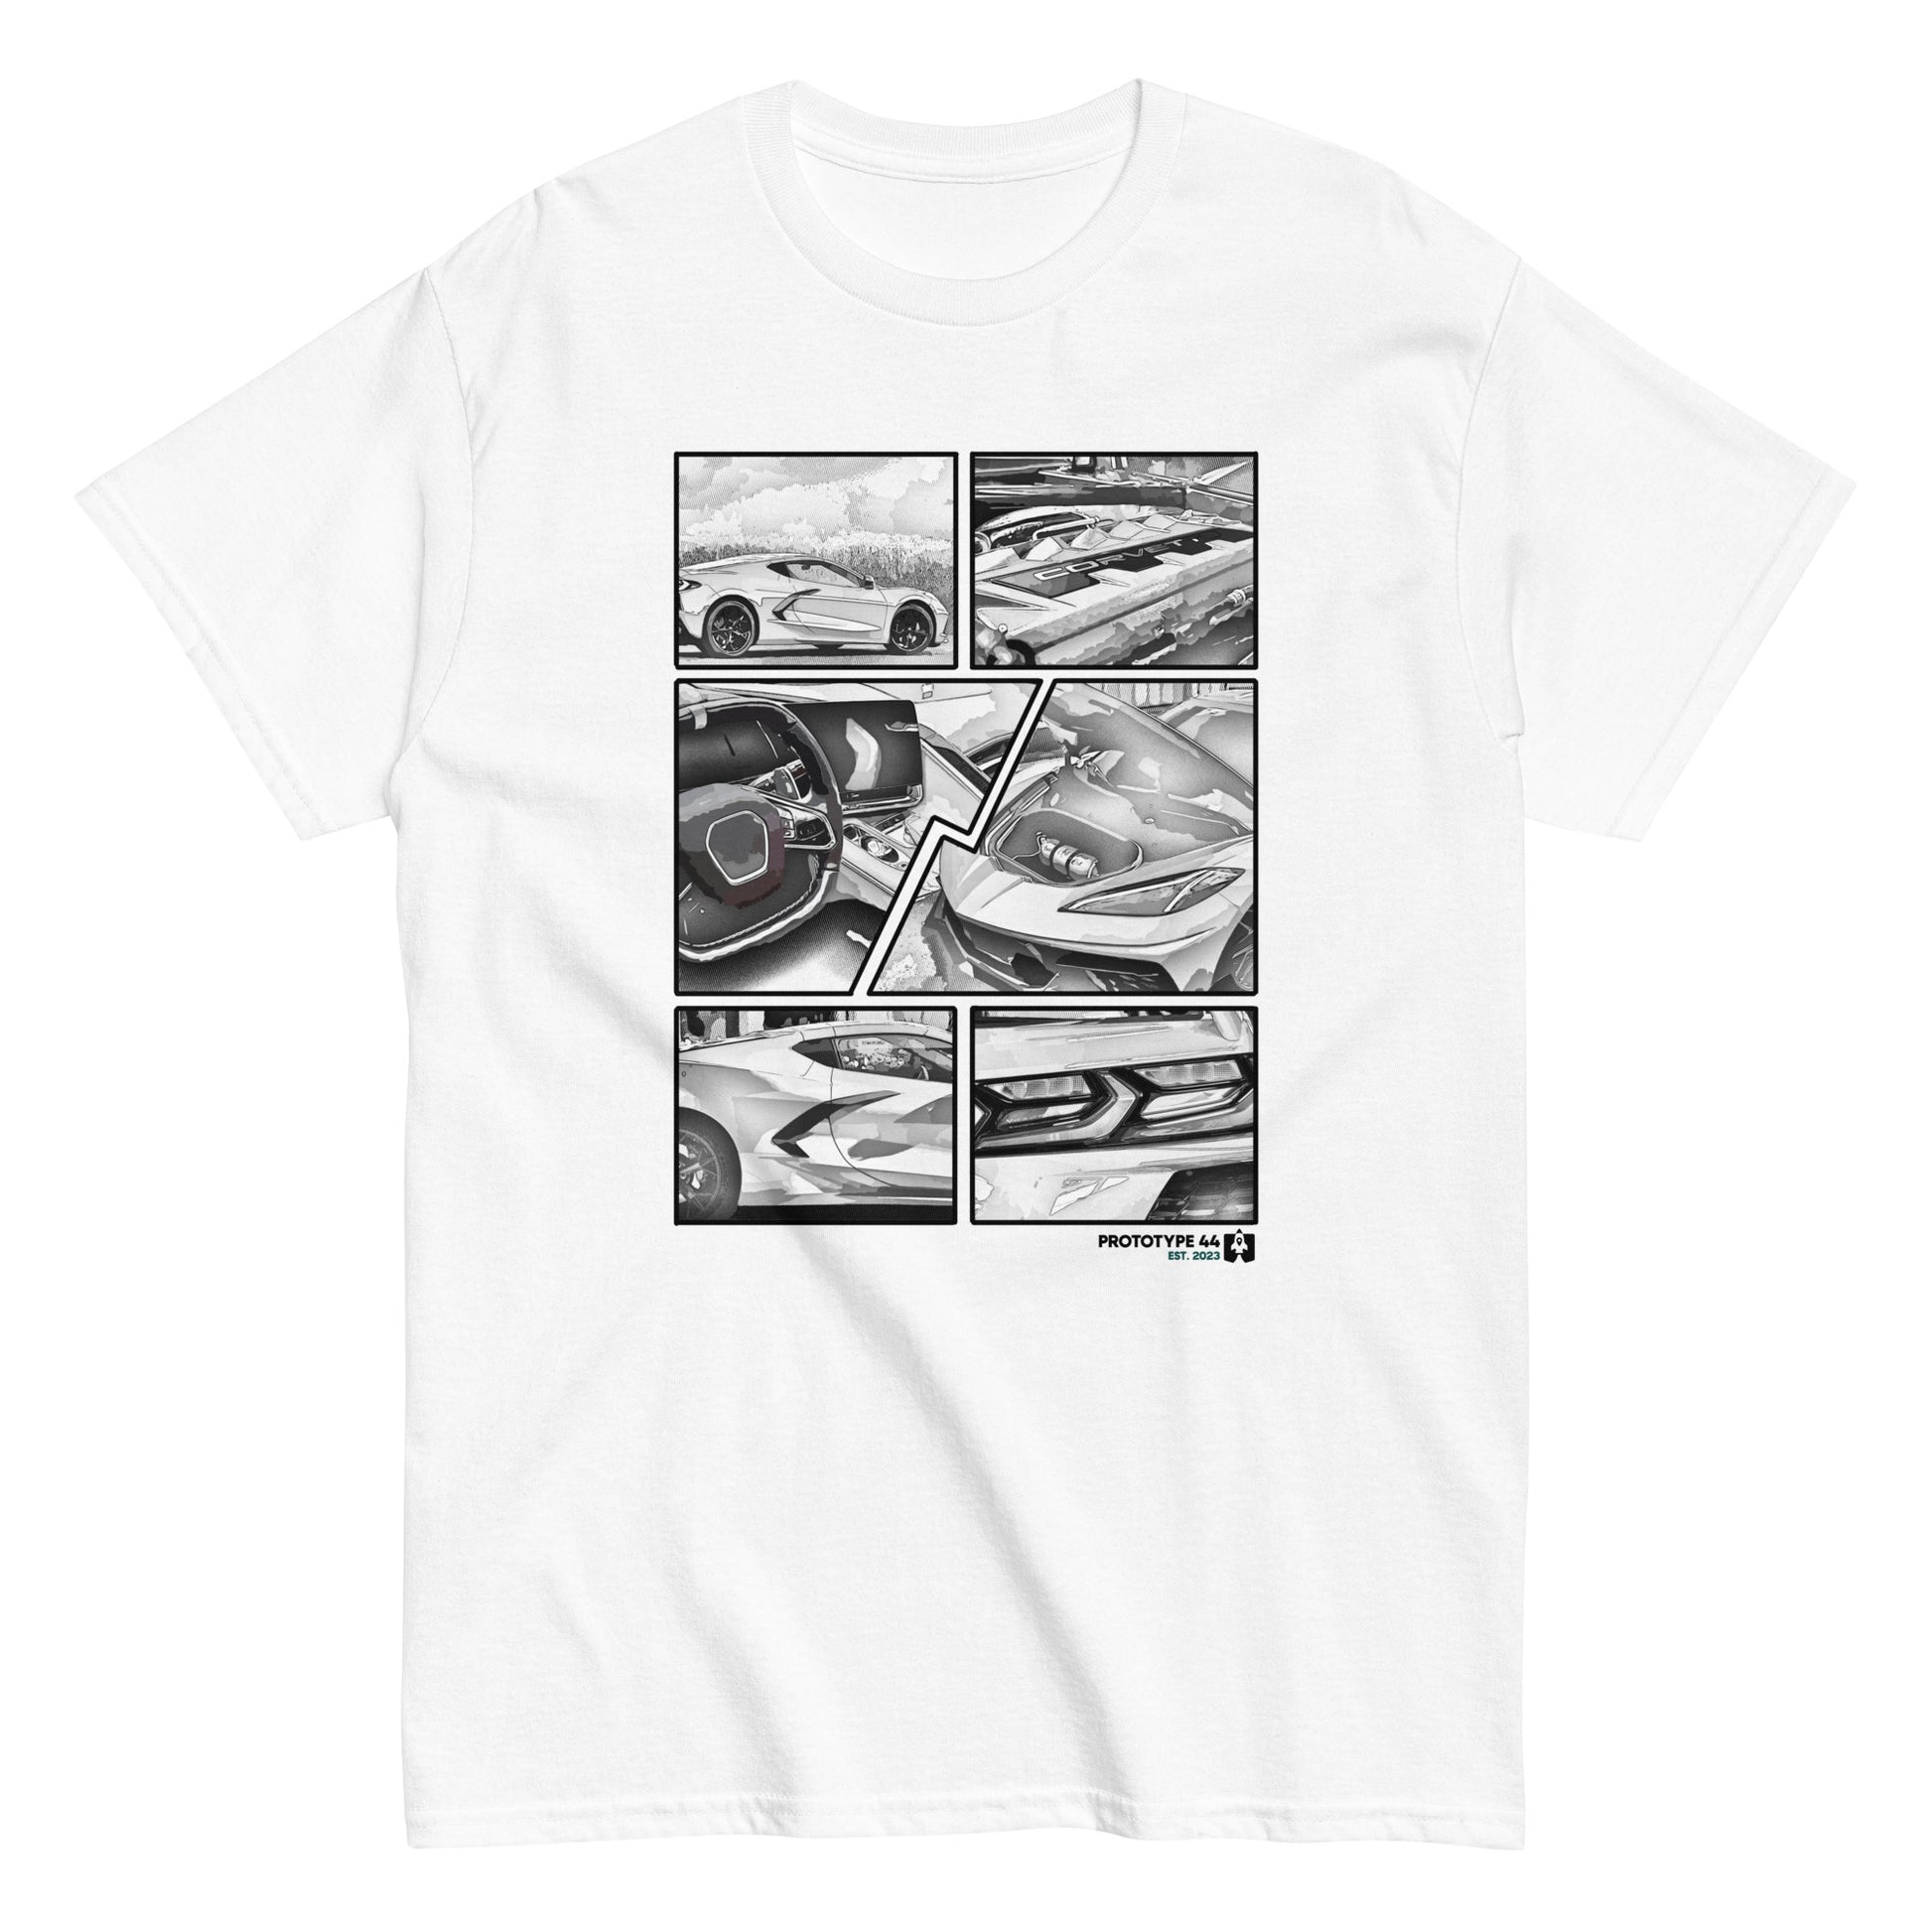 t-shirt on white surface. Manga with 6 panels: Corvette side views, tail light, steering wheel, engine, frunk.